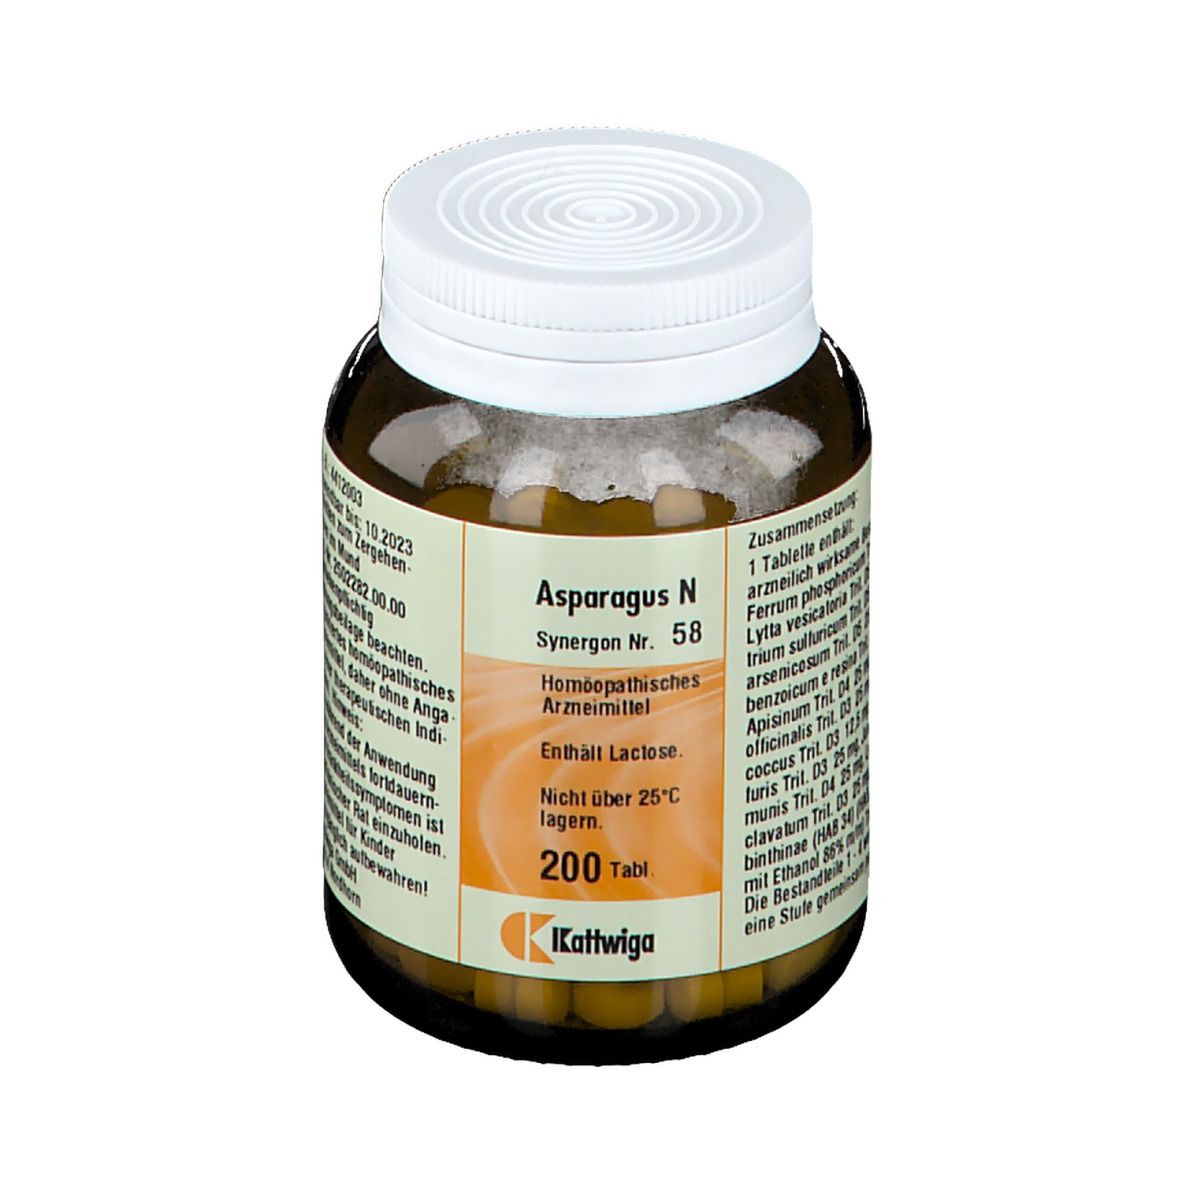 SYNERGON 58 Asparagus N Tabletten